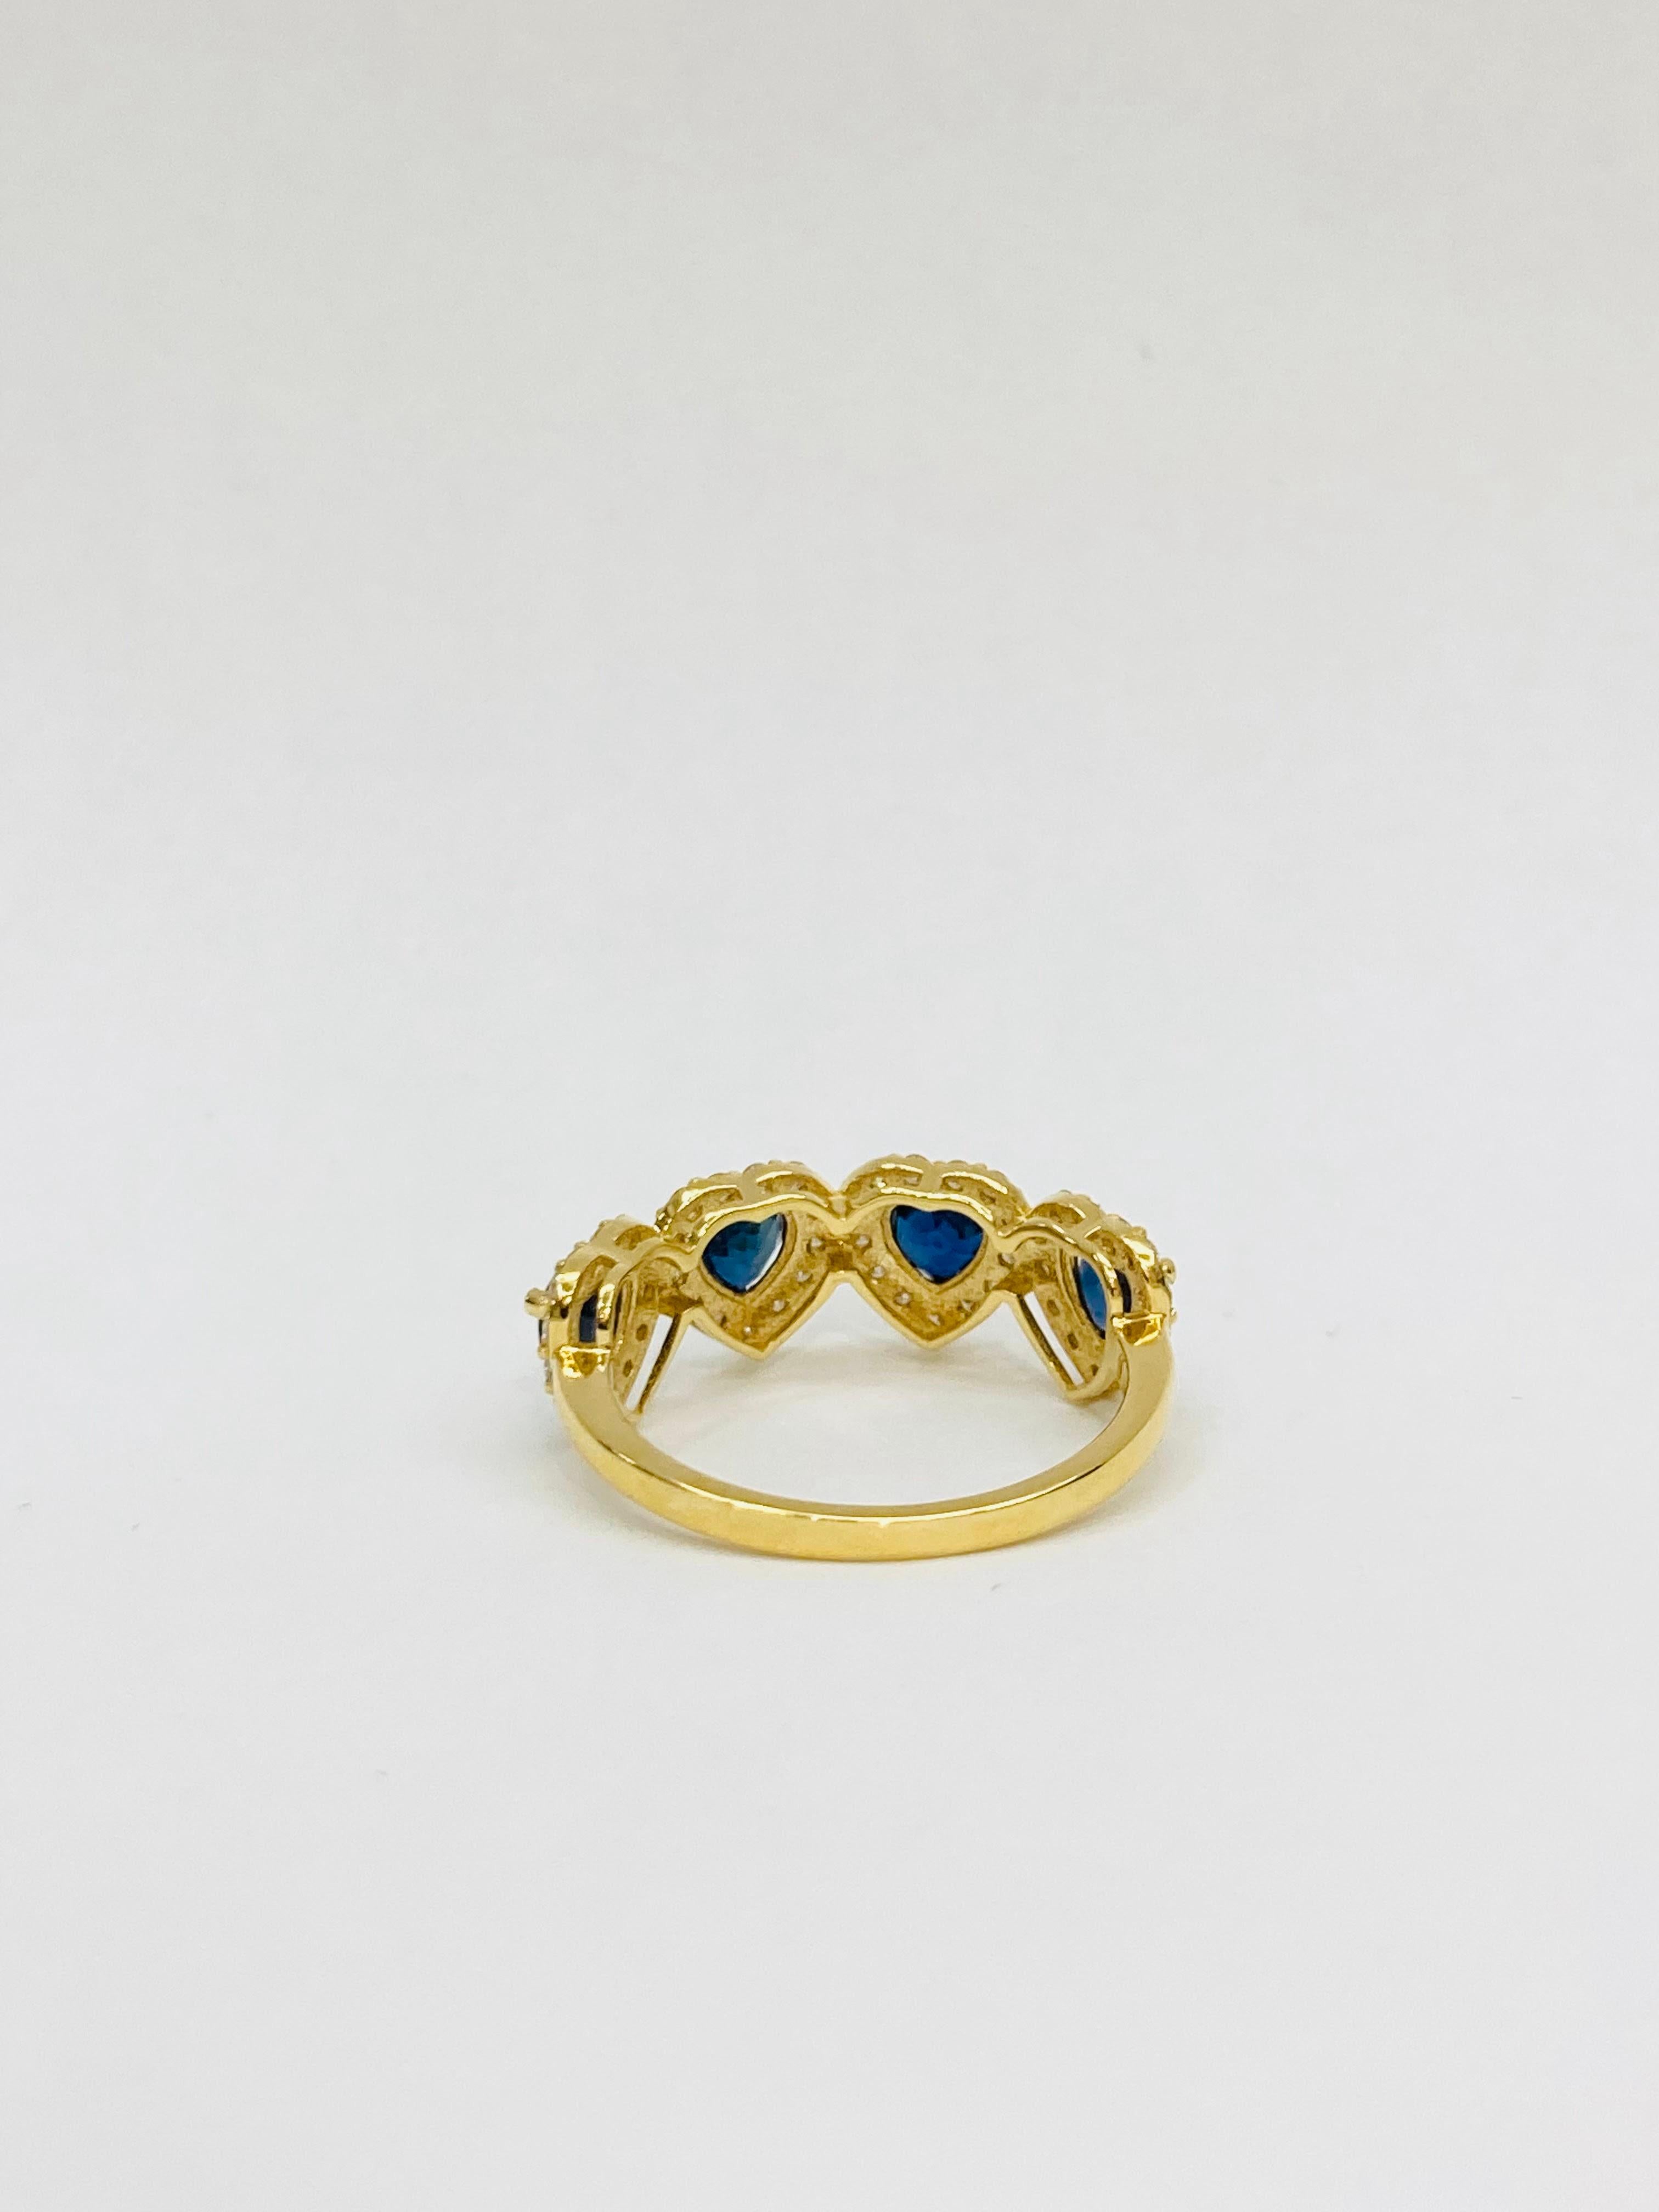 Heart Cut Bochic “Retro Vintage” Sapphire & Diamond  18K Gold & Eternity Cluster Ring. For Sale